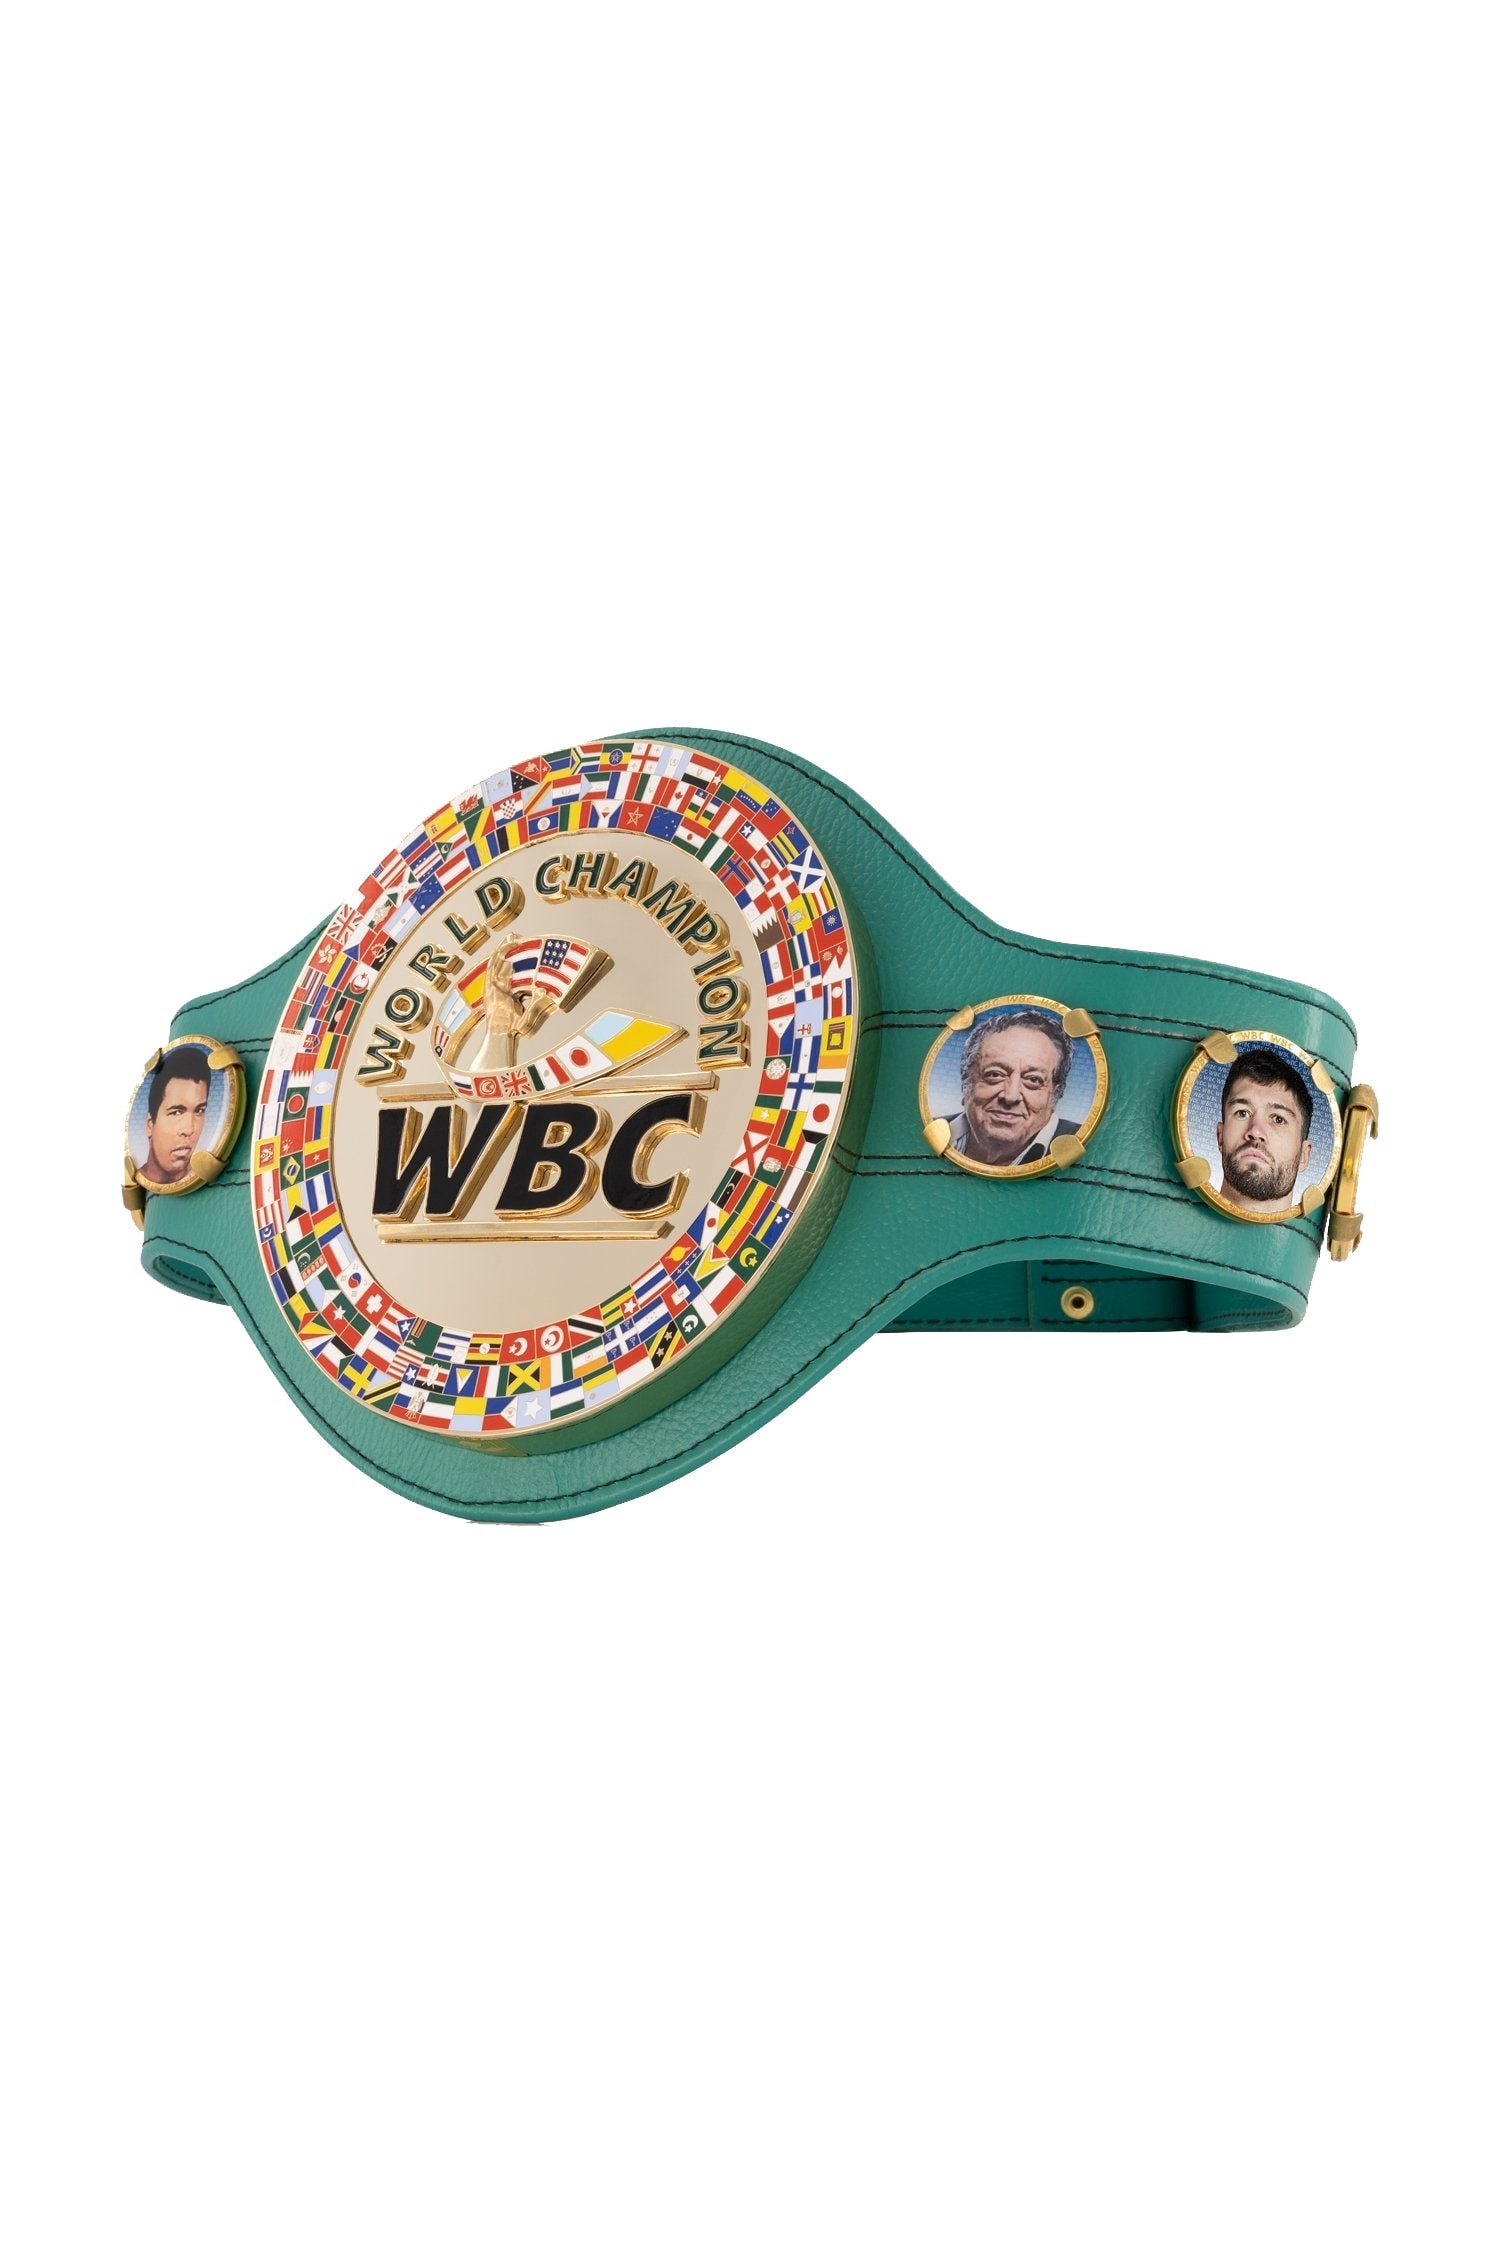 WBC Store Replica Belts WBC - Championship Replica Belt Saúl “Canelo” Álvarez vs. John Ryder